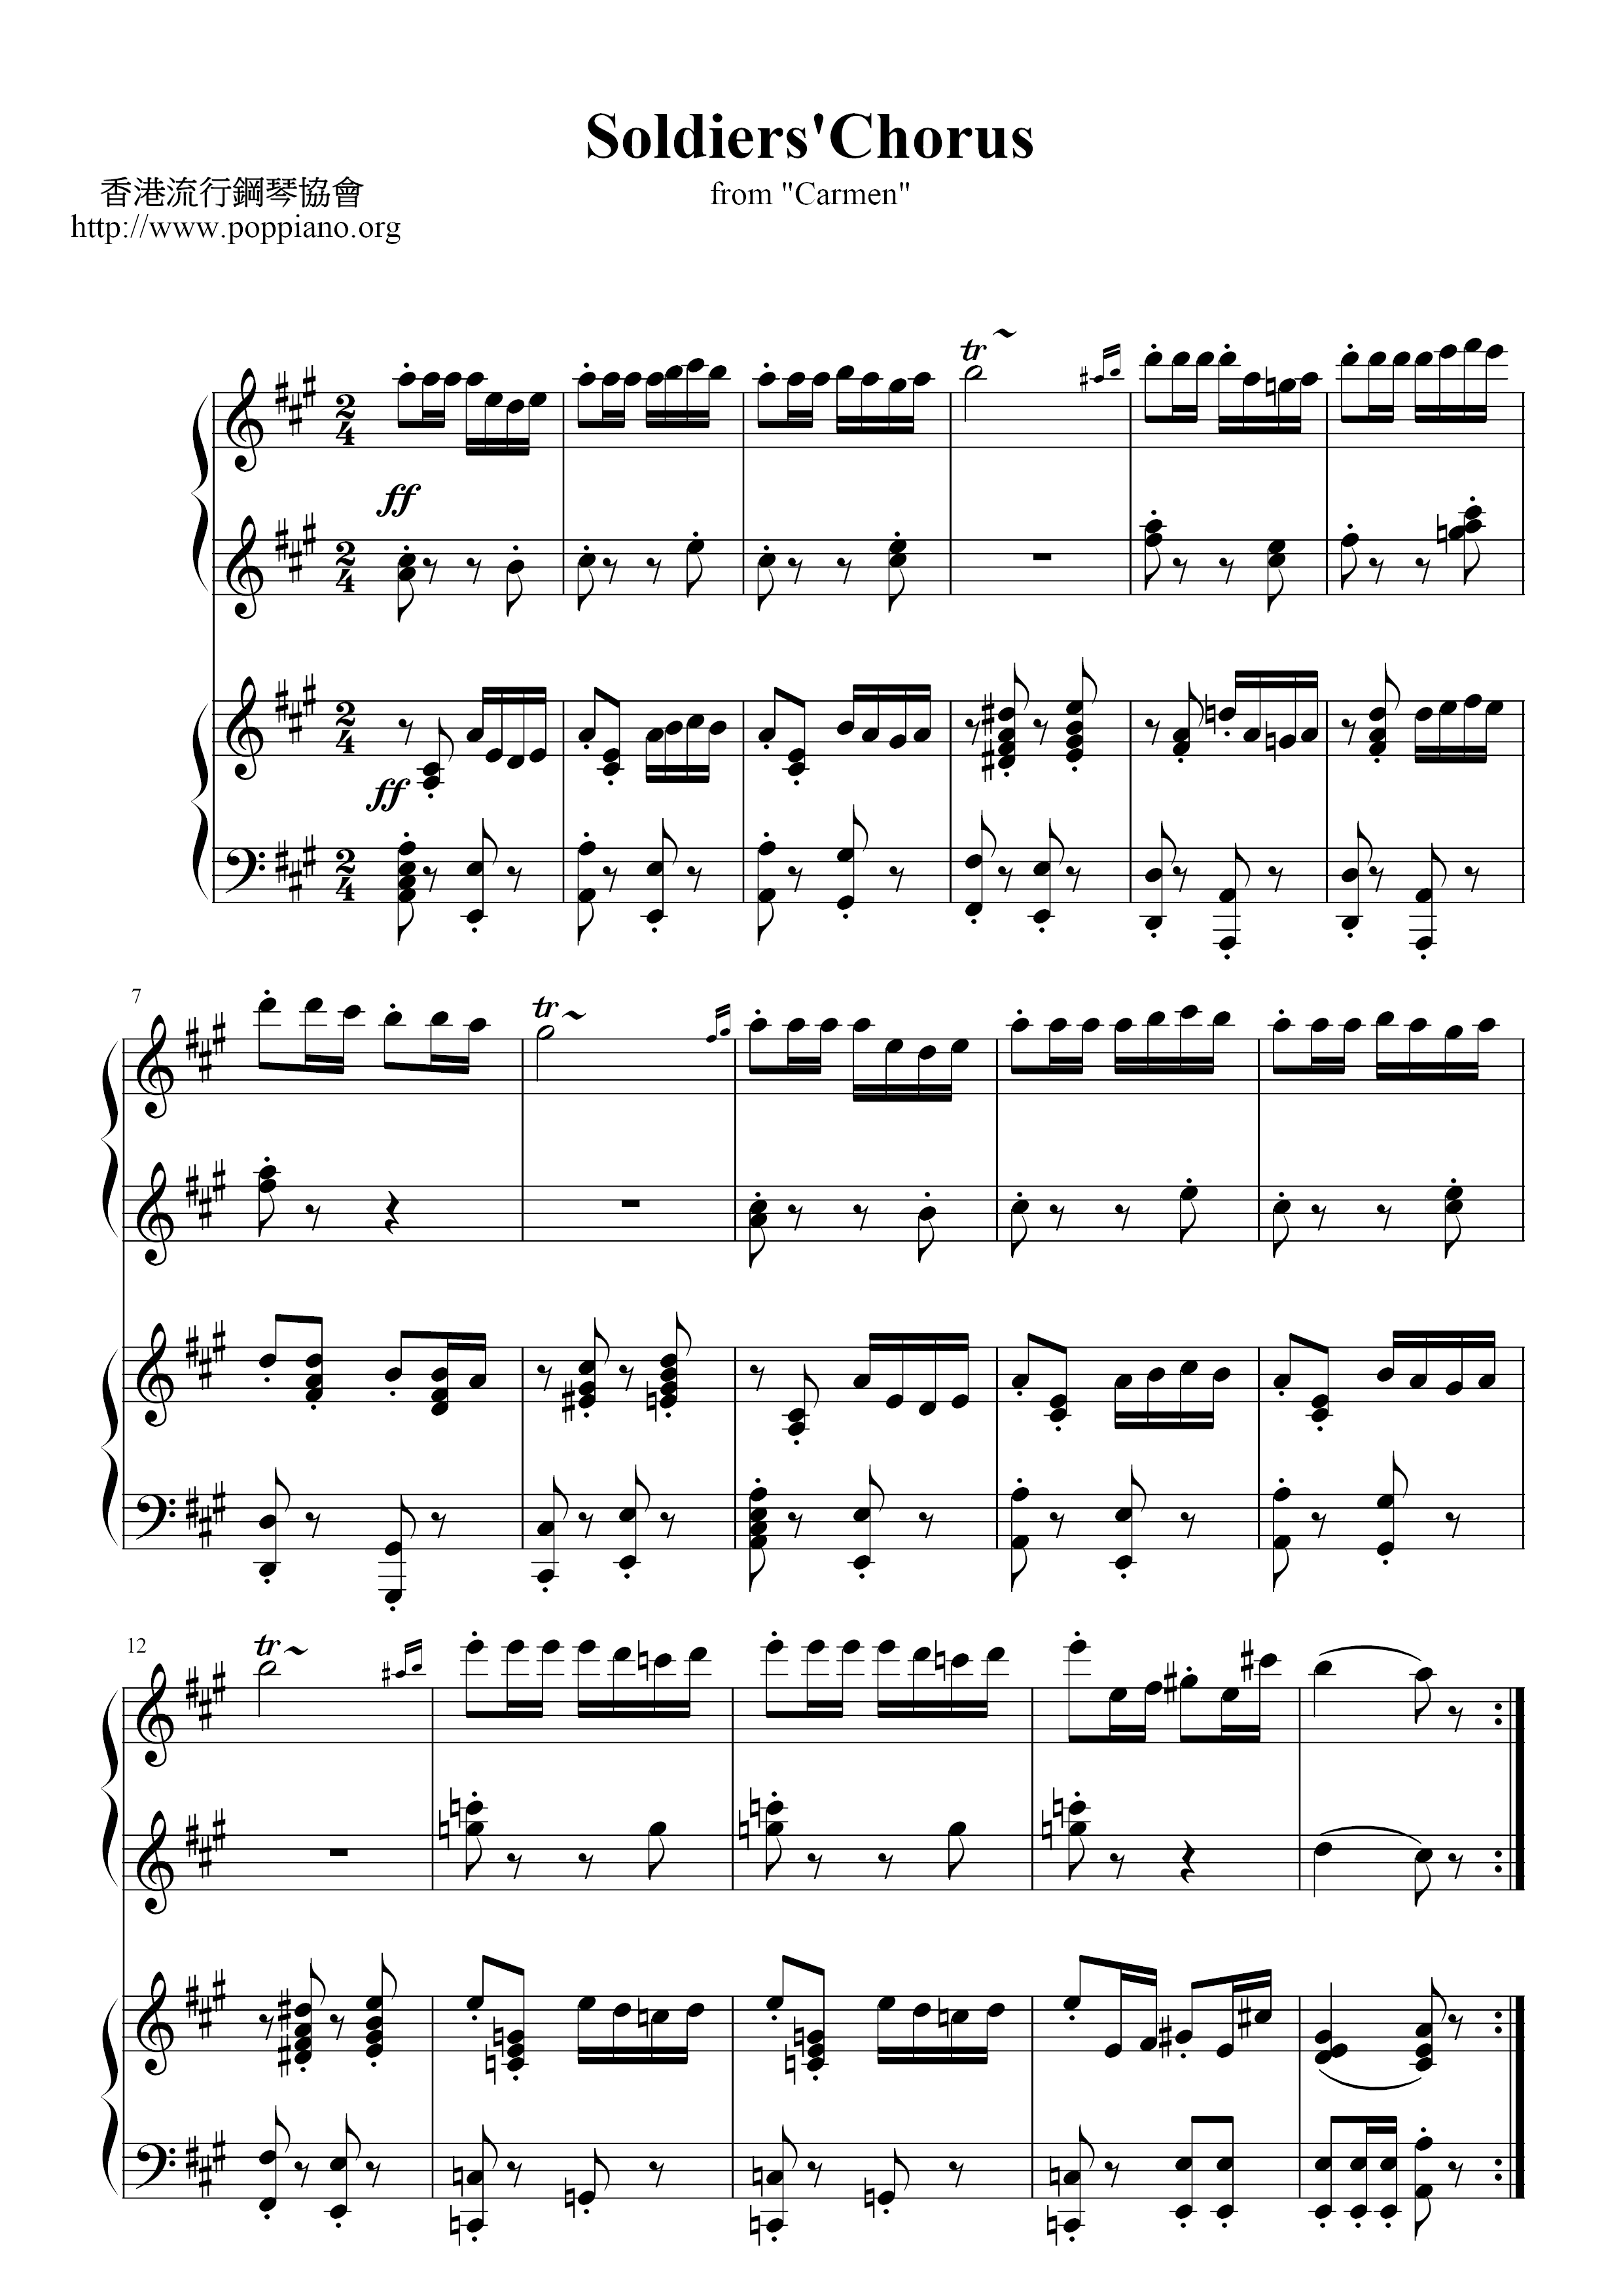 Carmen - Soldiers Chorusピアノ譜